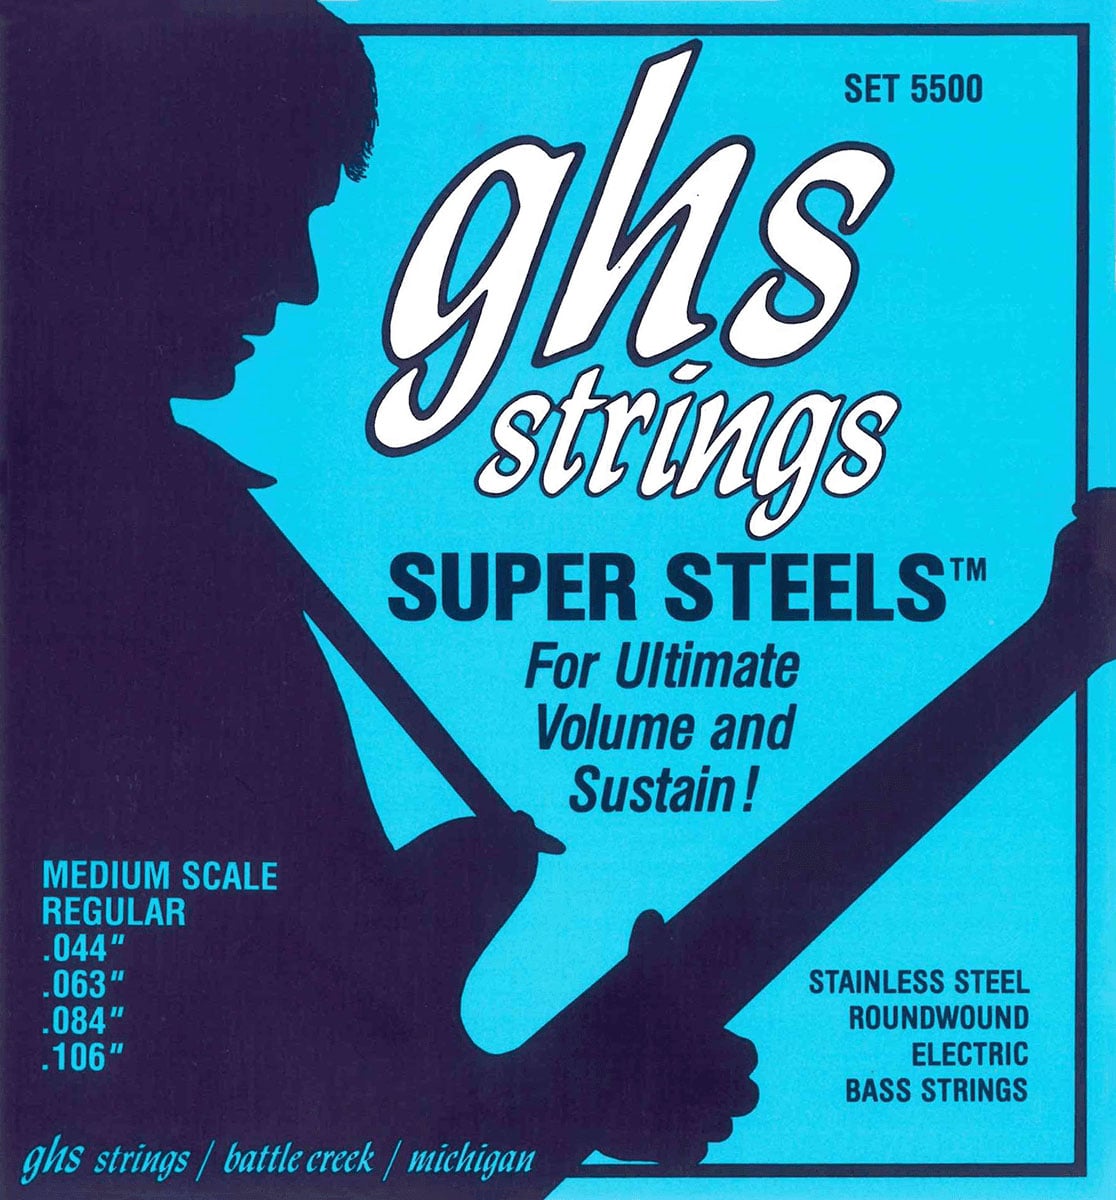 GHS 5500 SUPER STEELS MEDIUM SCALE REGULAR 44-106